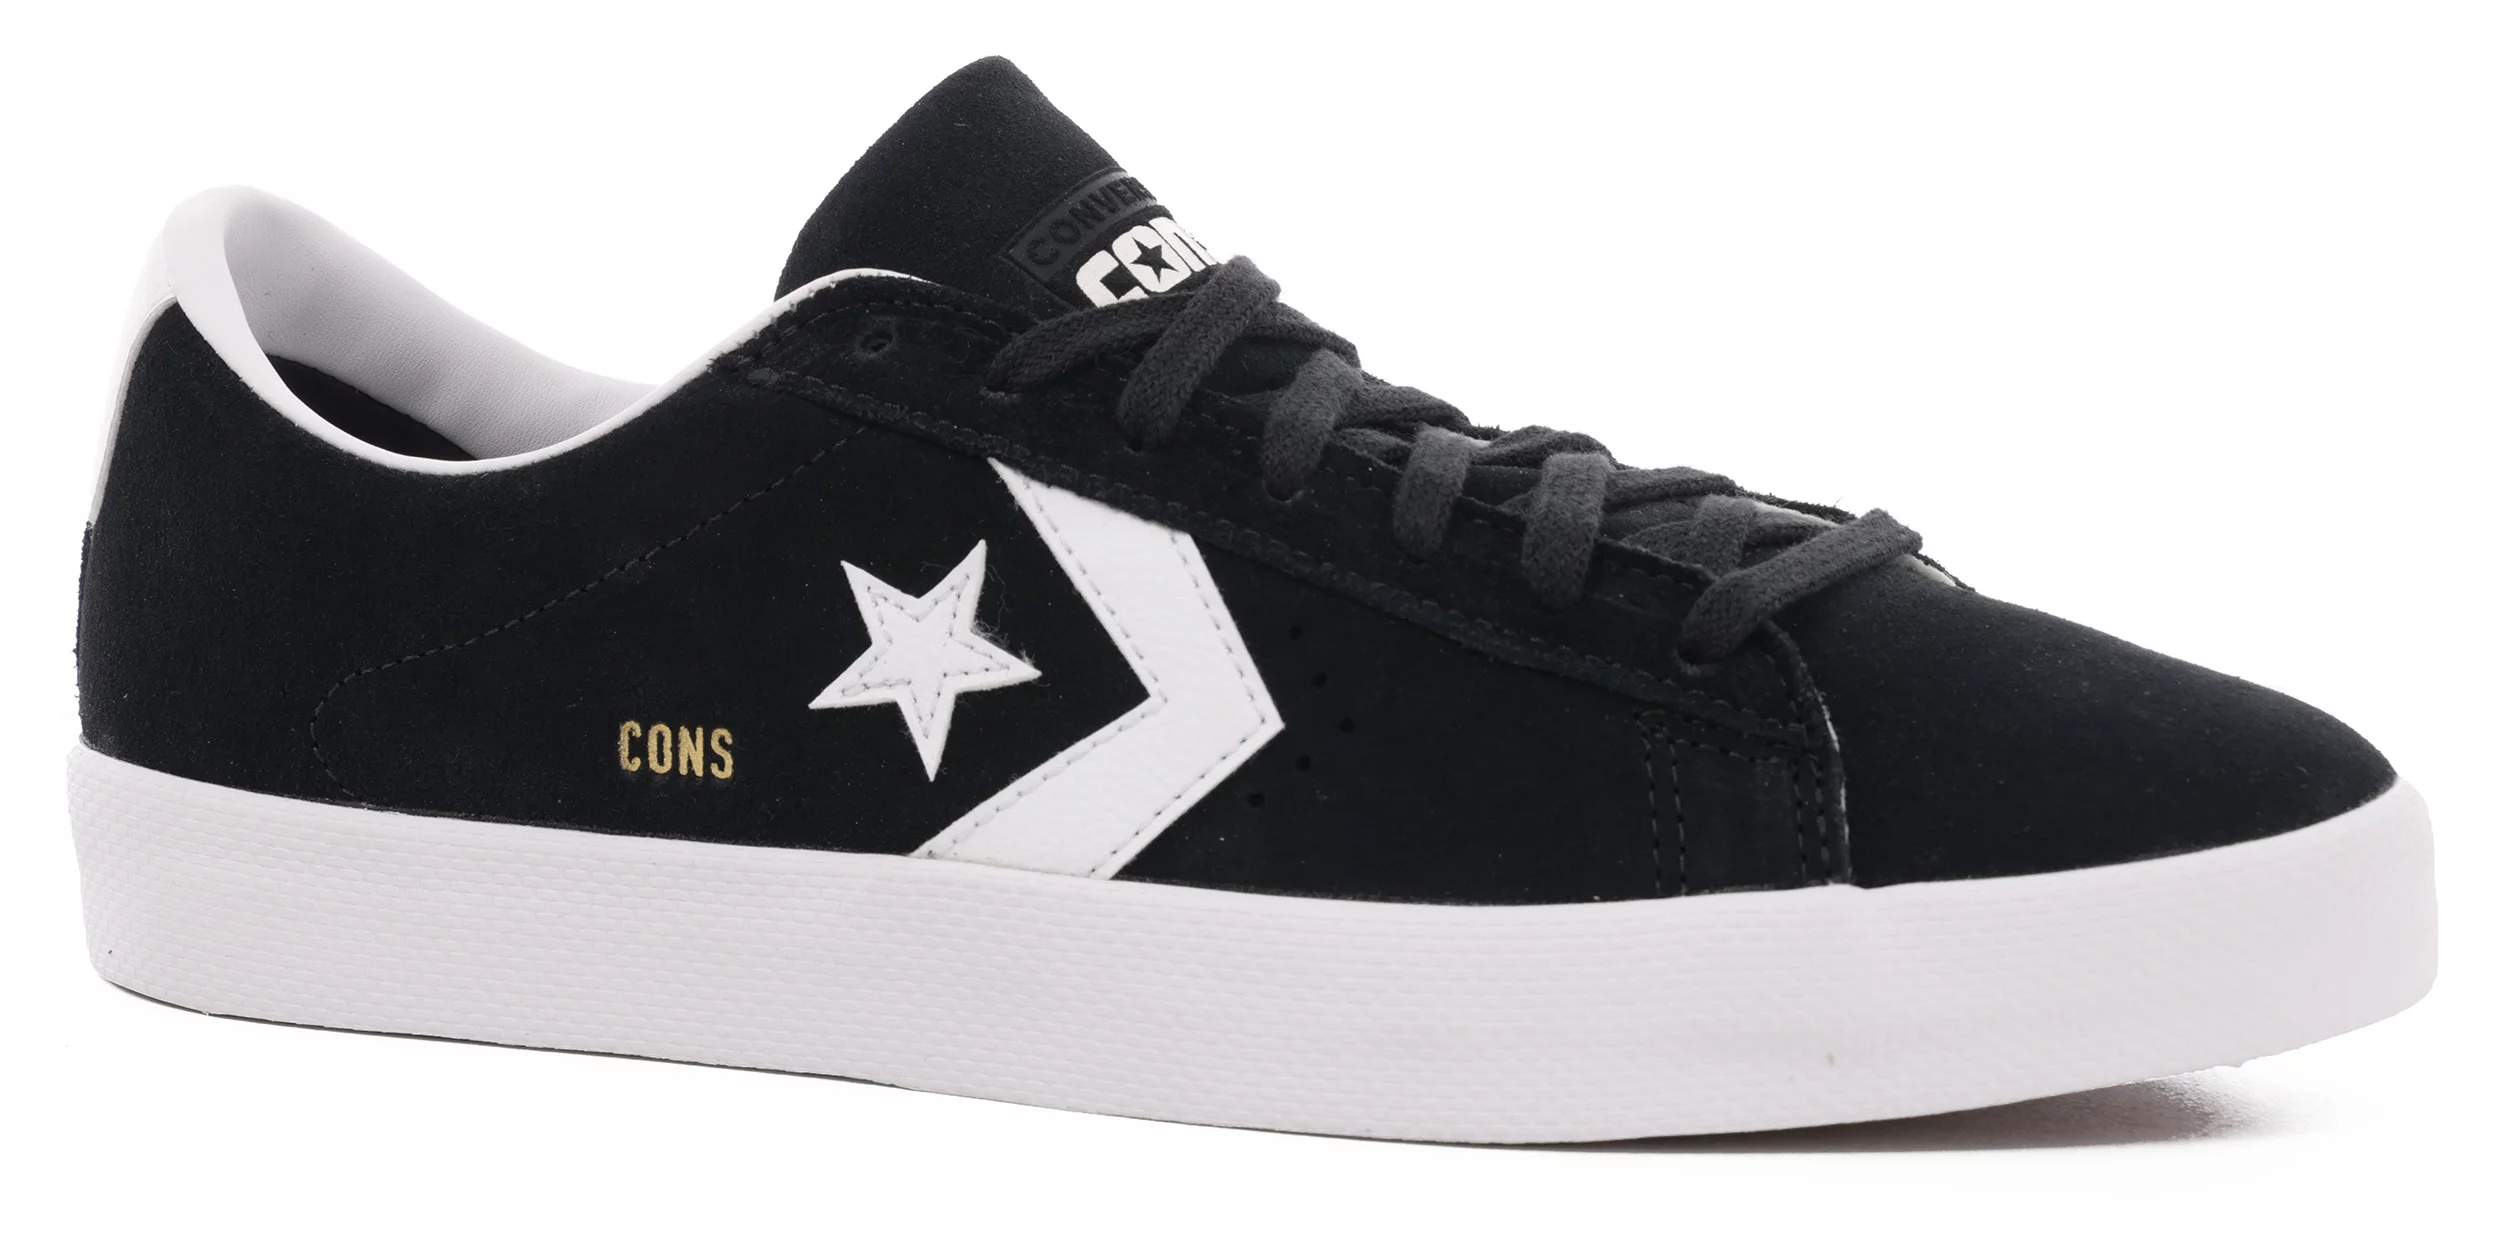 Converse Pro Leather Vulcanized Pro Skate Shoes - black/white